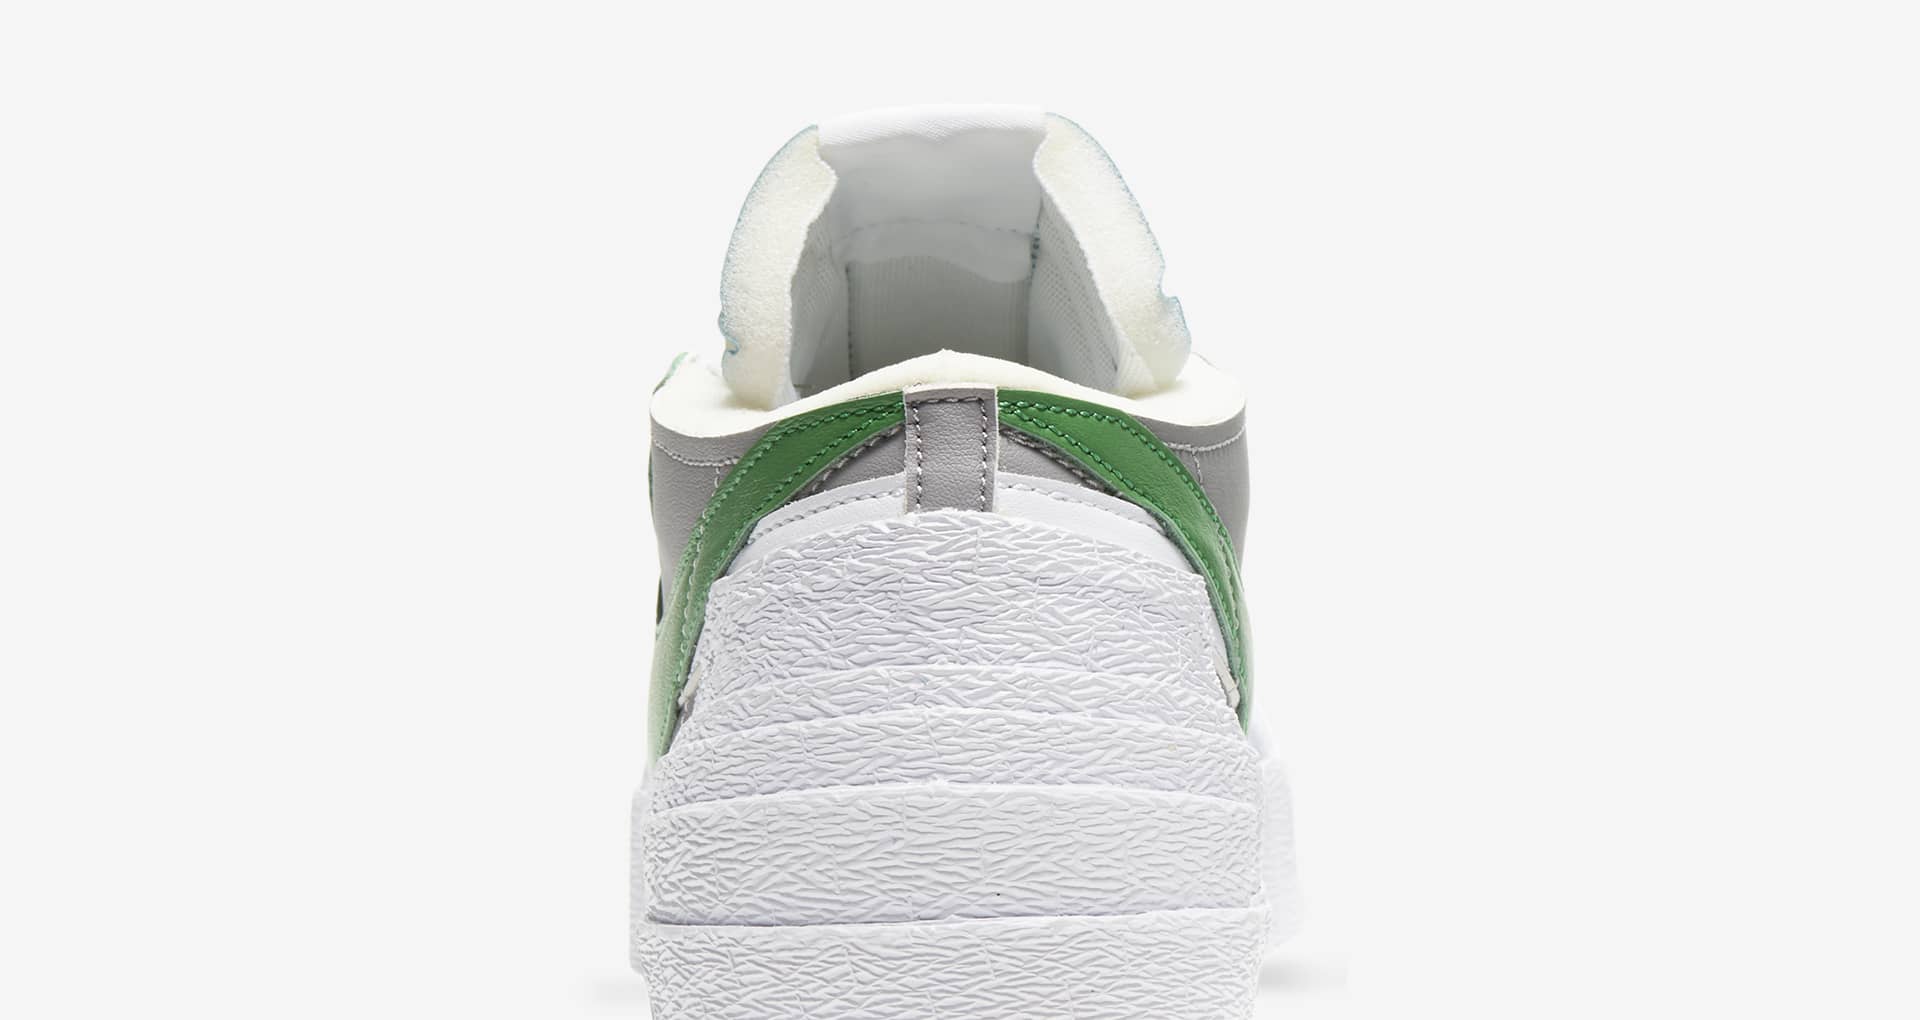 Blazer Low x sacai 'Classic Green' Release Date. Nike SNKRS GB